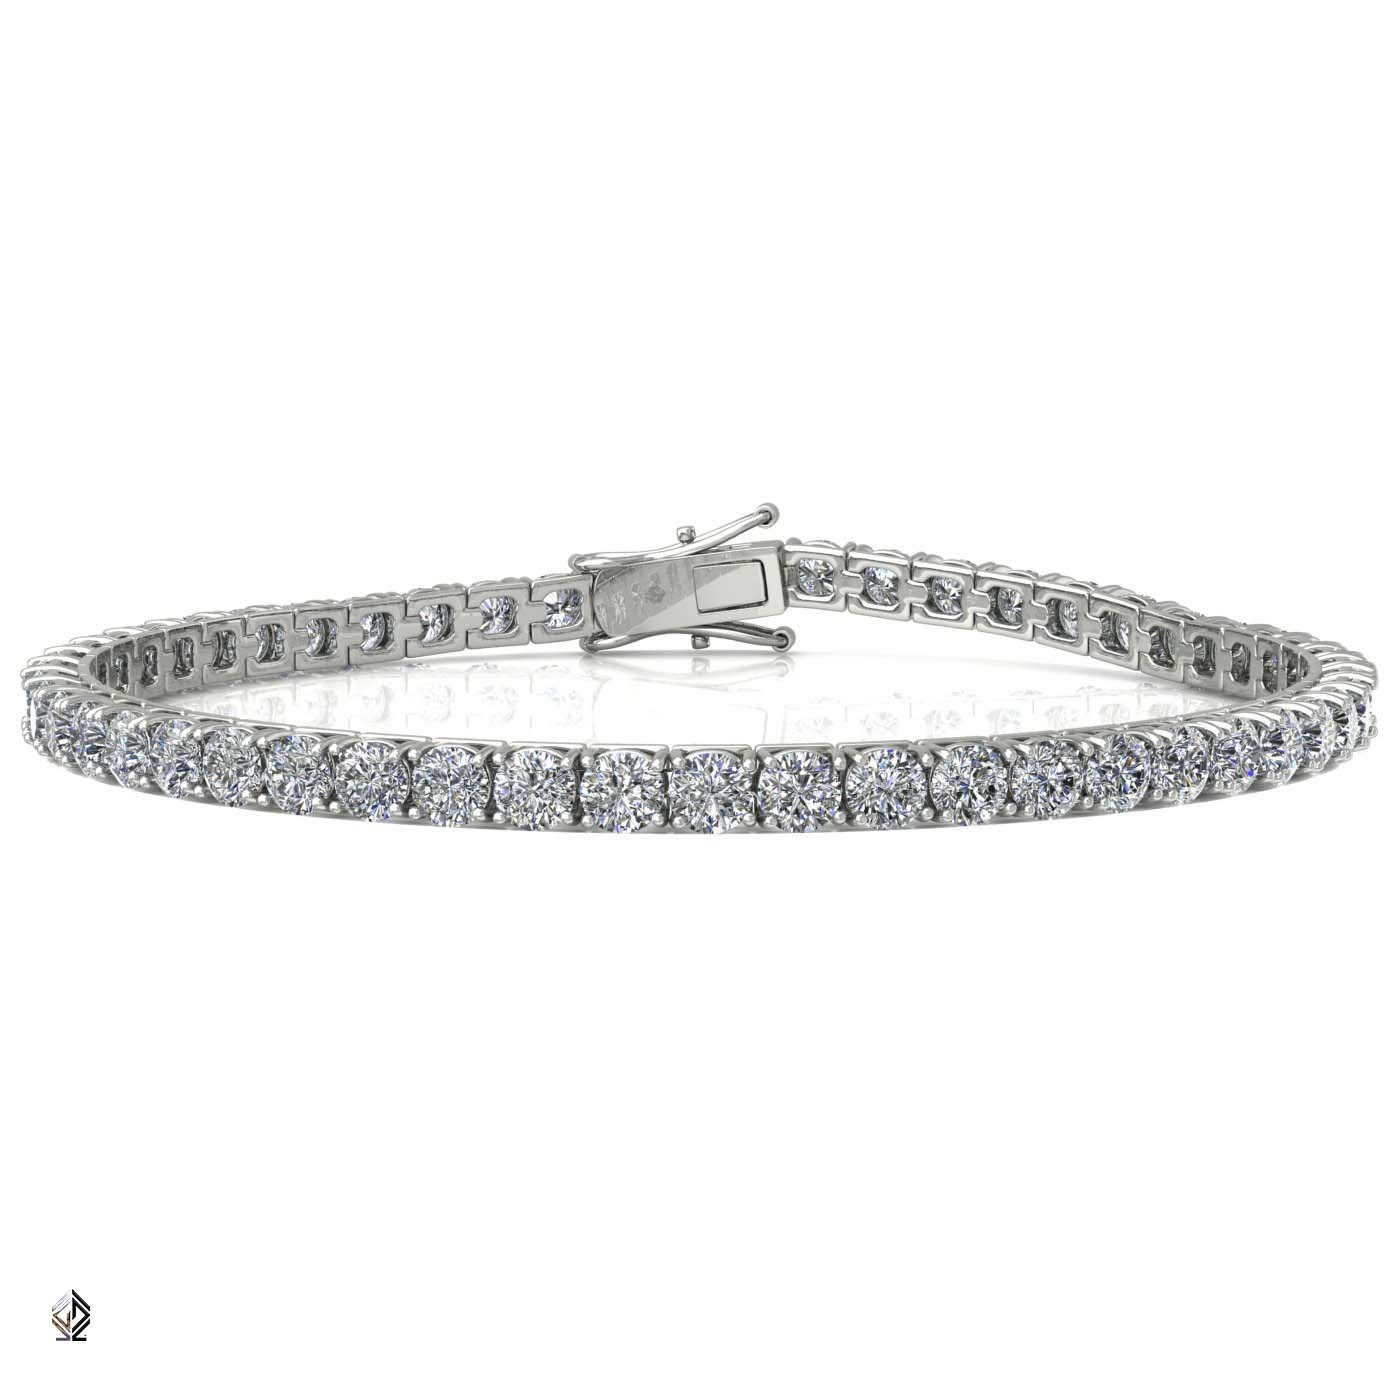 18k white gold 2.0mm 4 prong round shape diamond tennis bracelet in square setting Photos & images